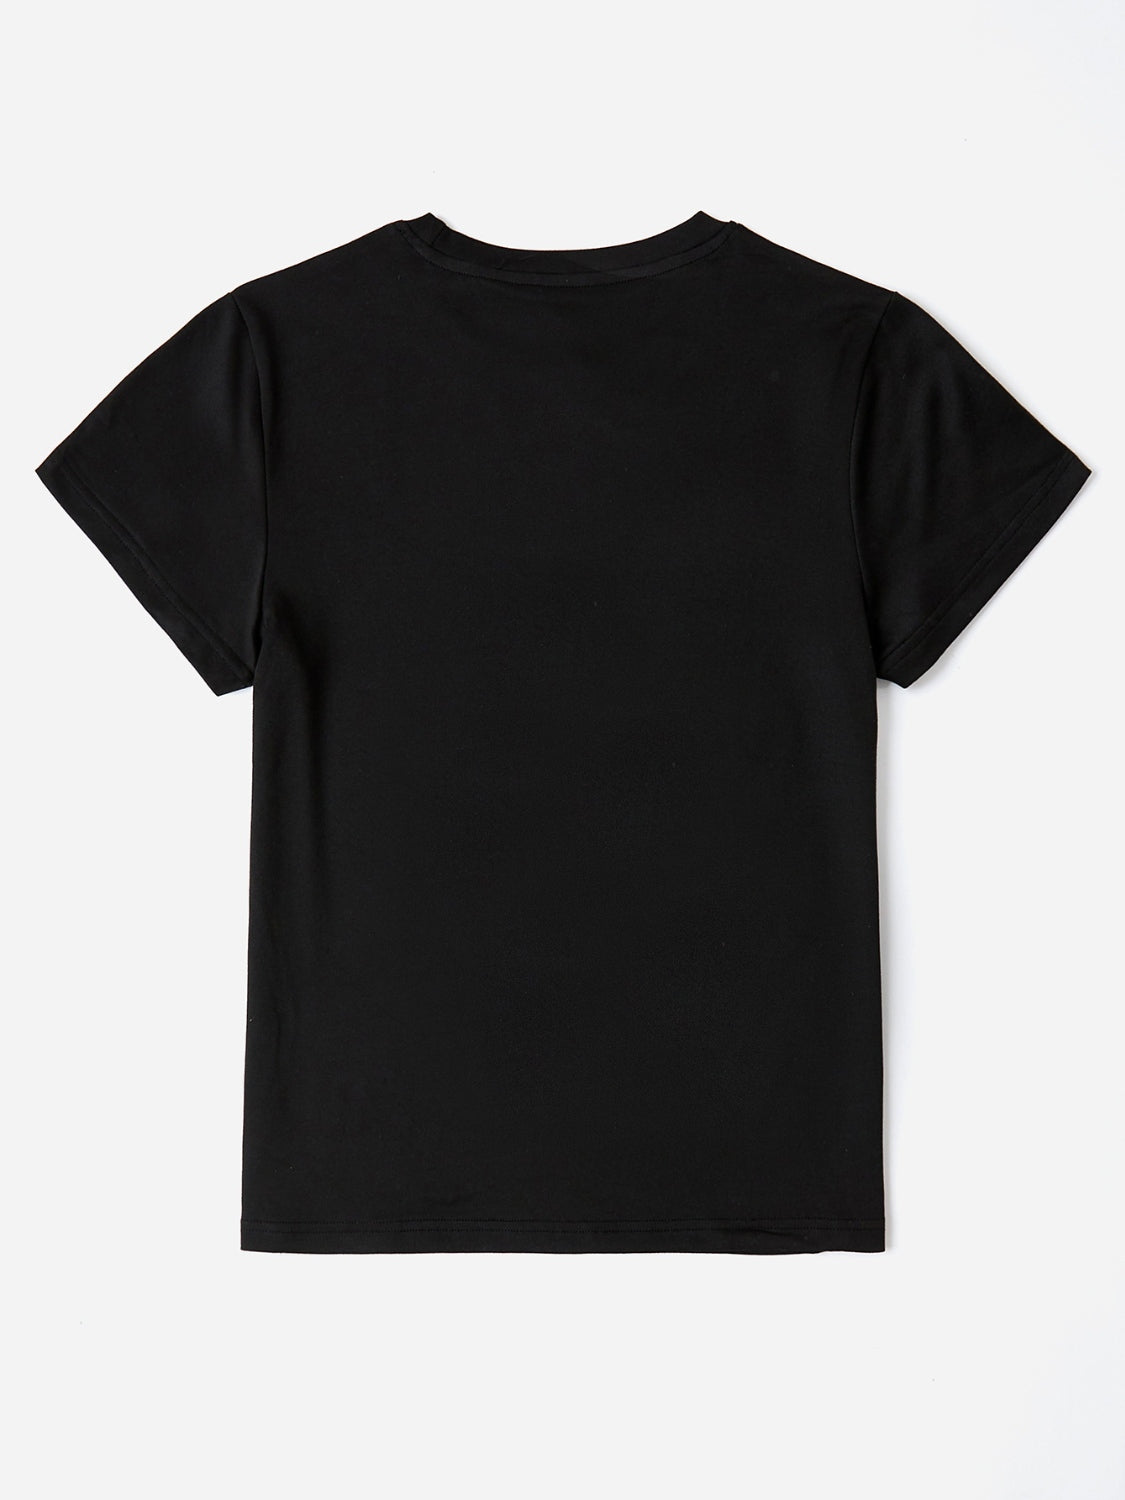 Graphic Round Neck Short Sleeve T-Shirt Trendsi